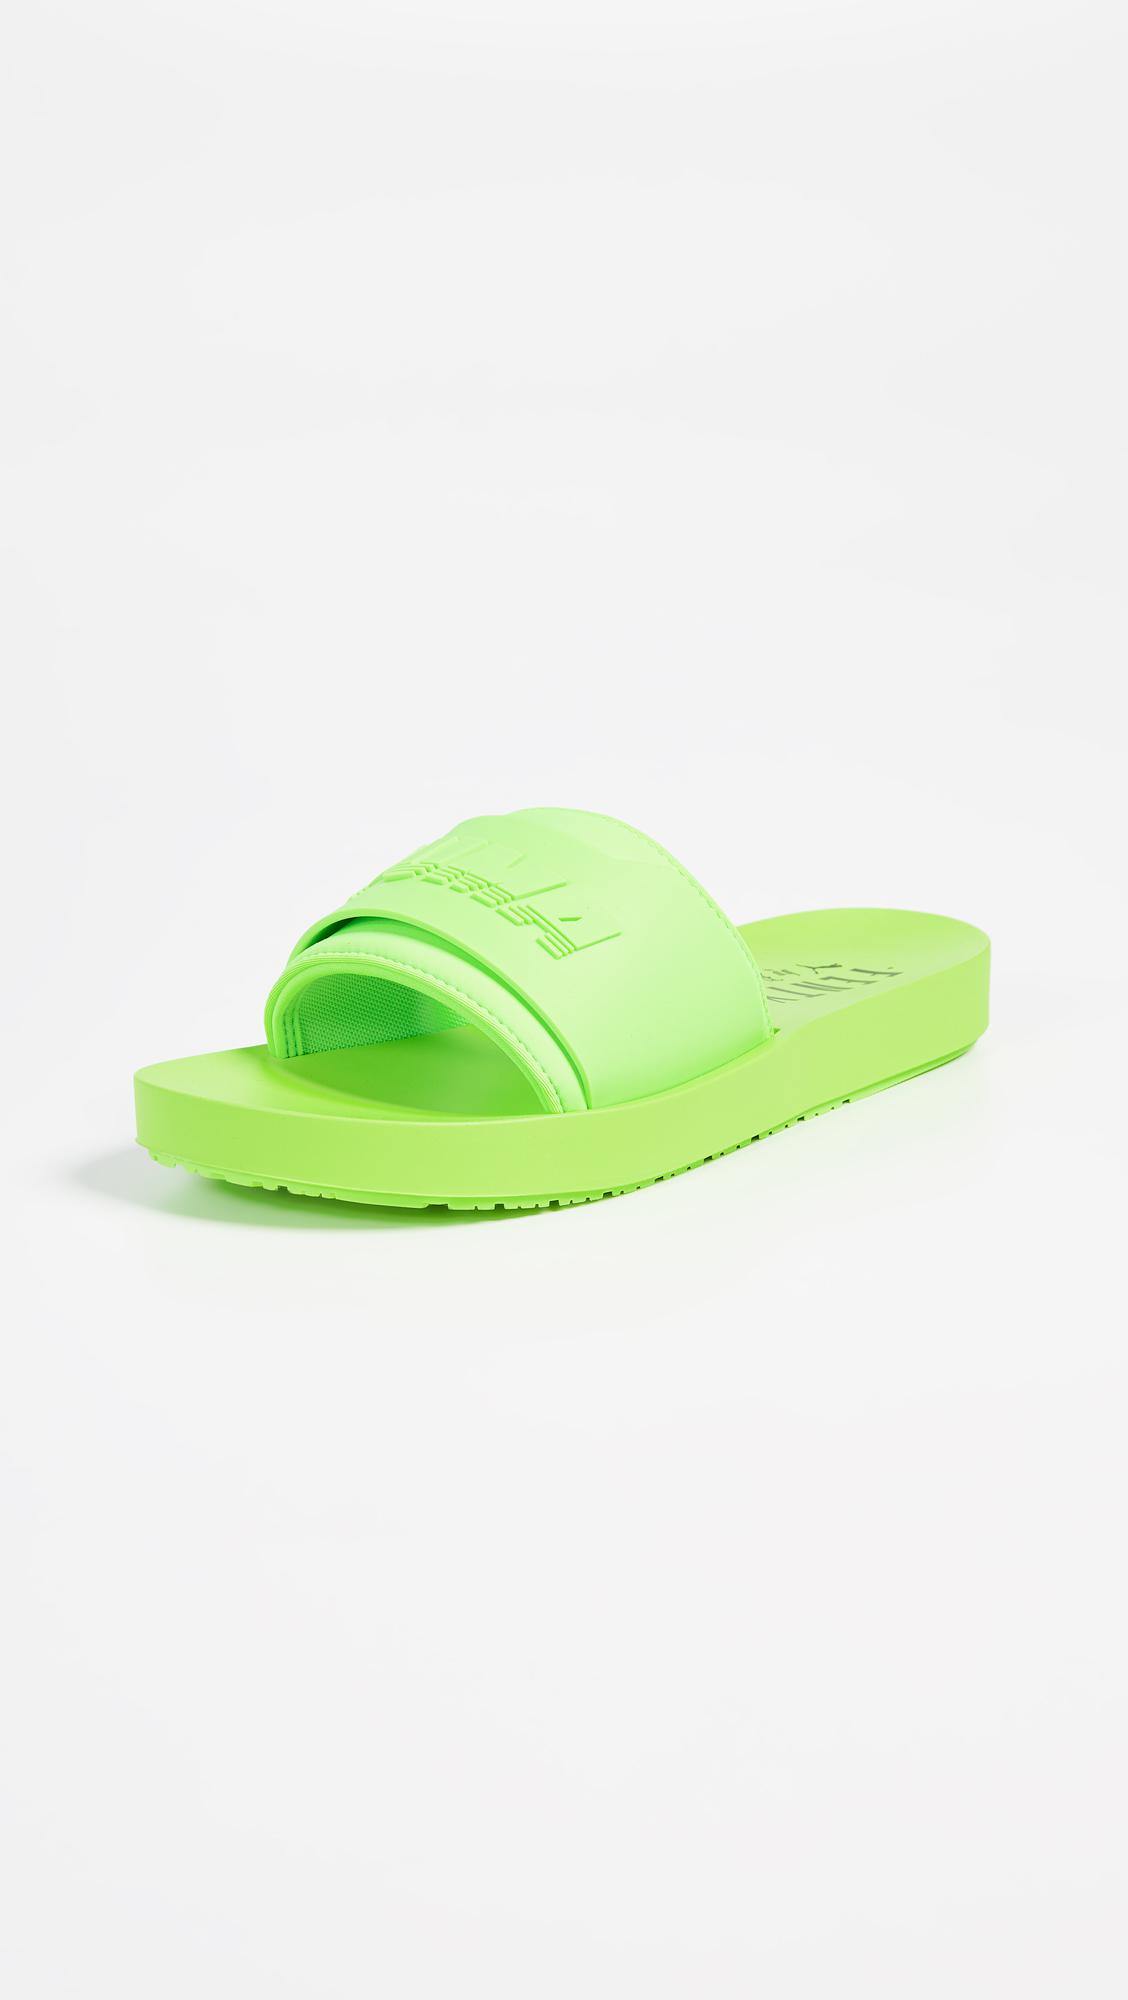 neon green puma slides